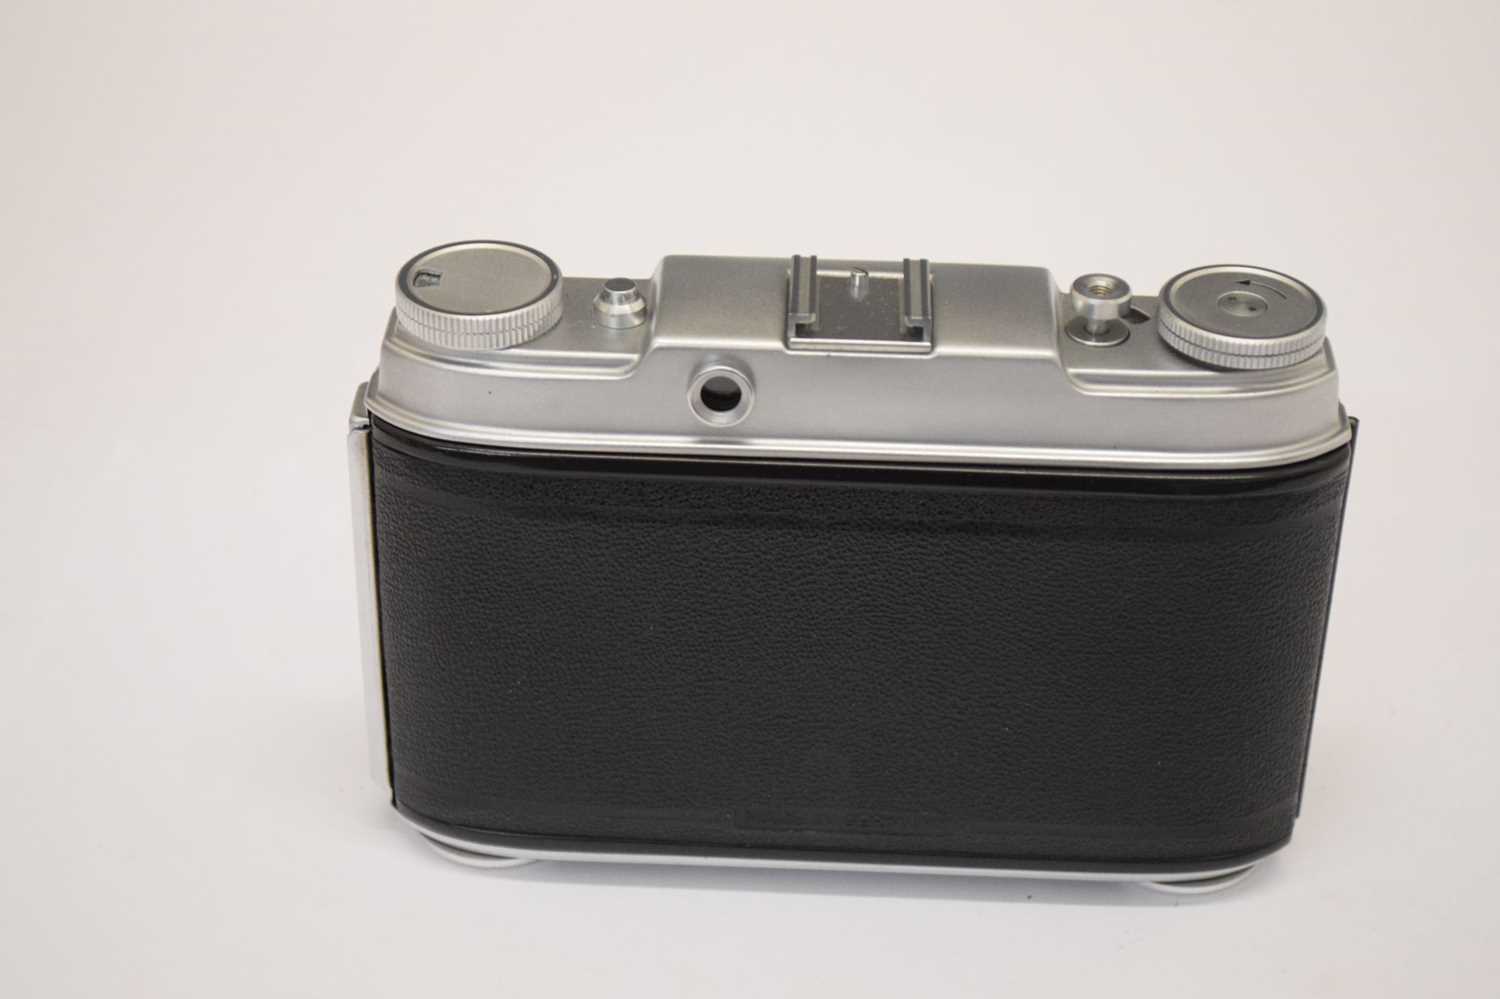 Agfa Super Isolette folding rangefinder camera - Image 4 of 10